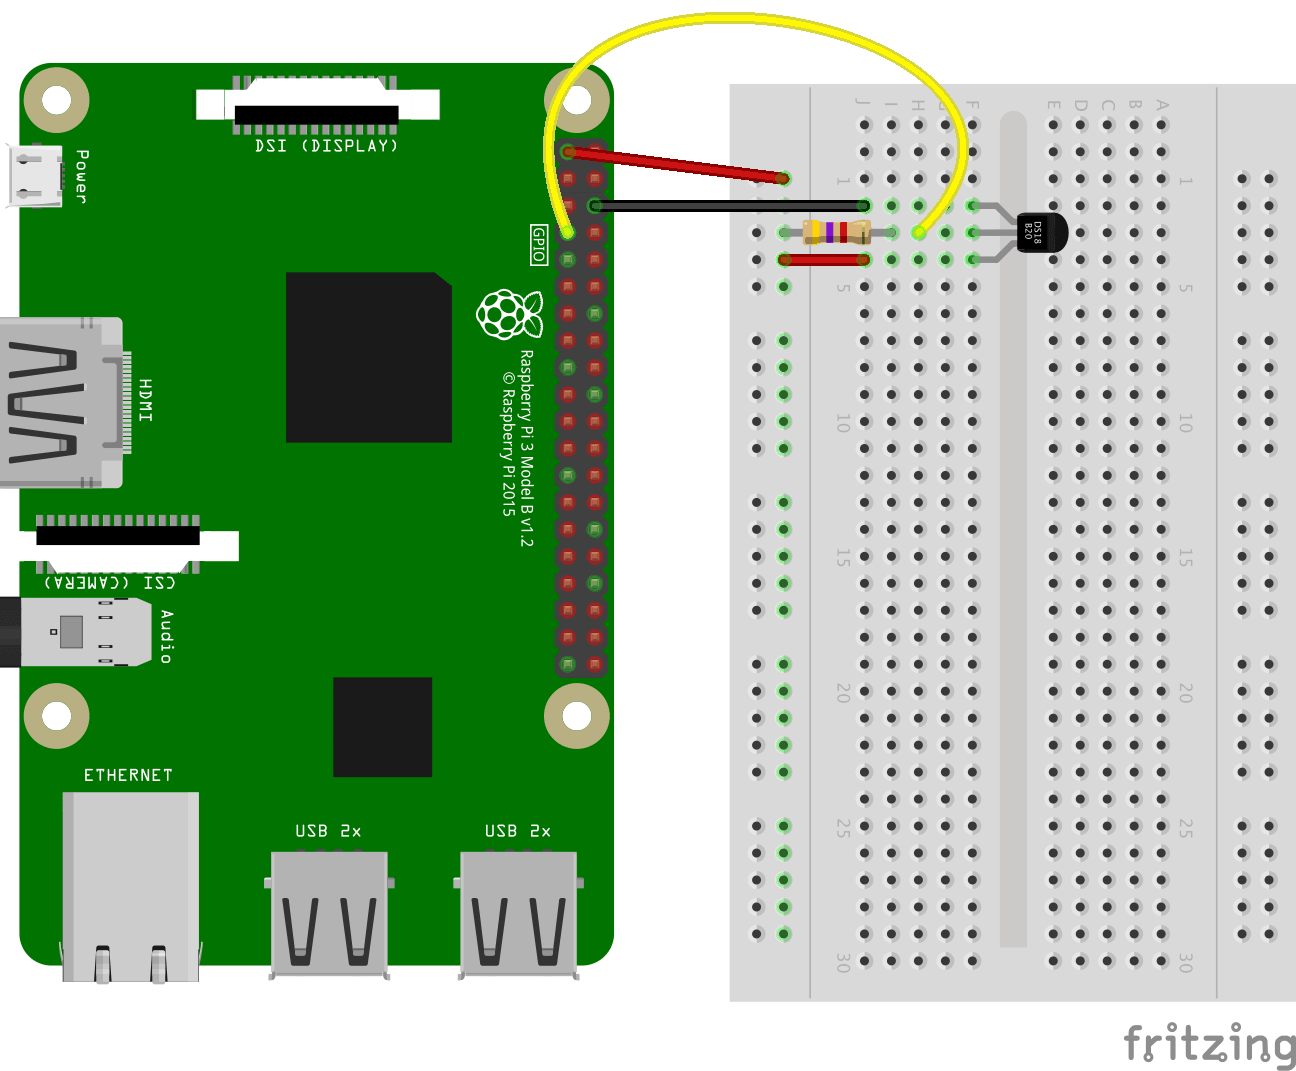 Connecting a temperature sensor to a Raspberry Pi